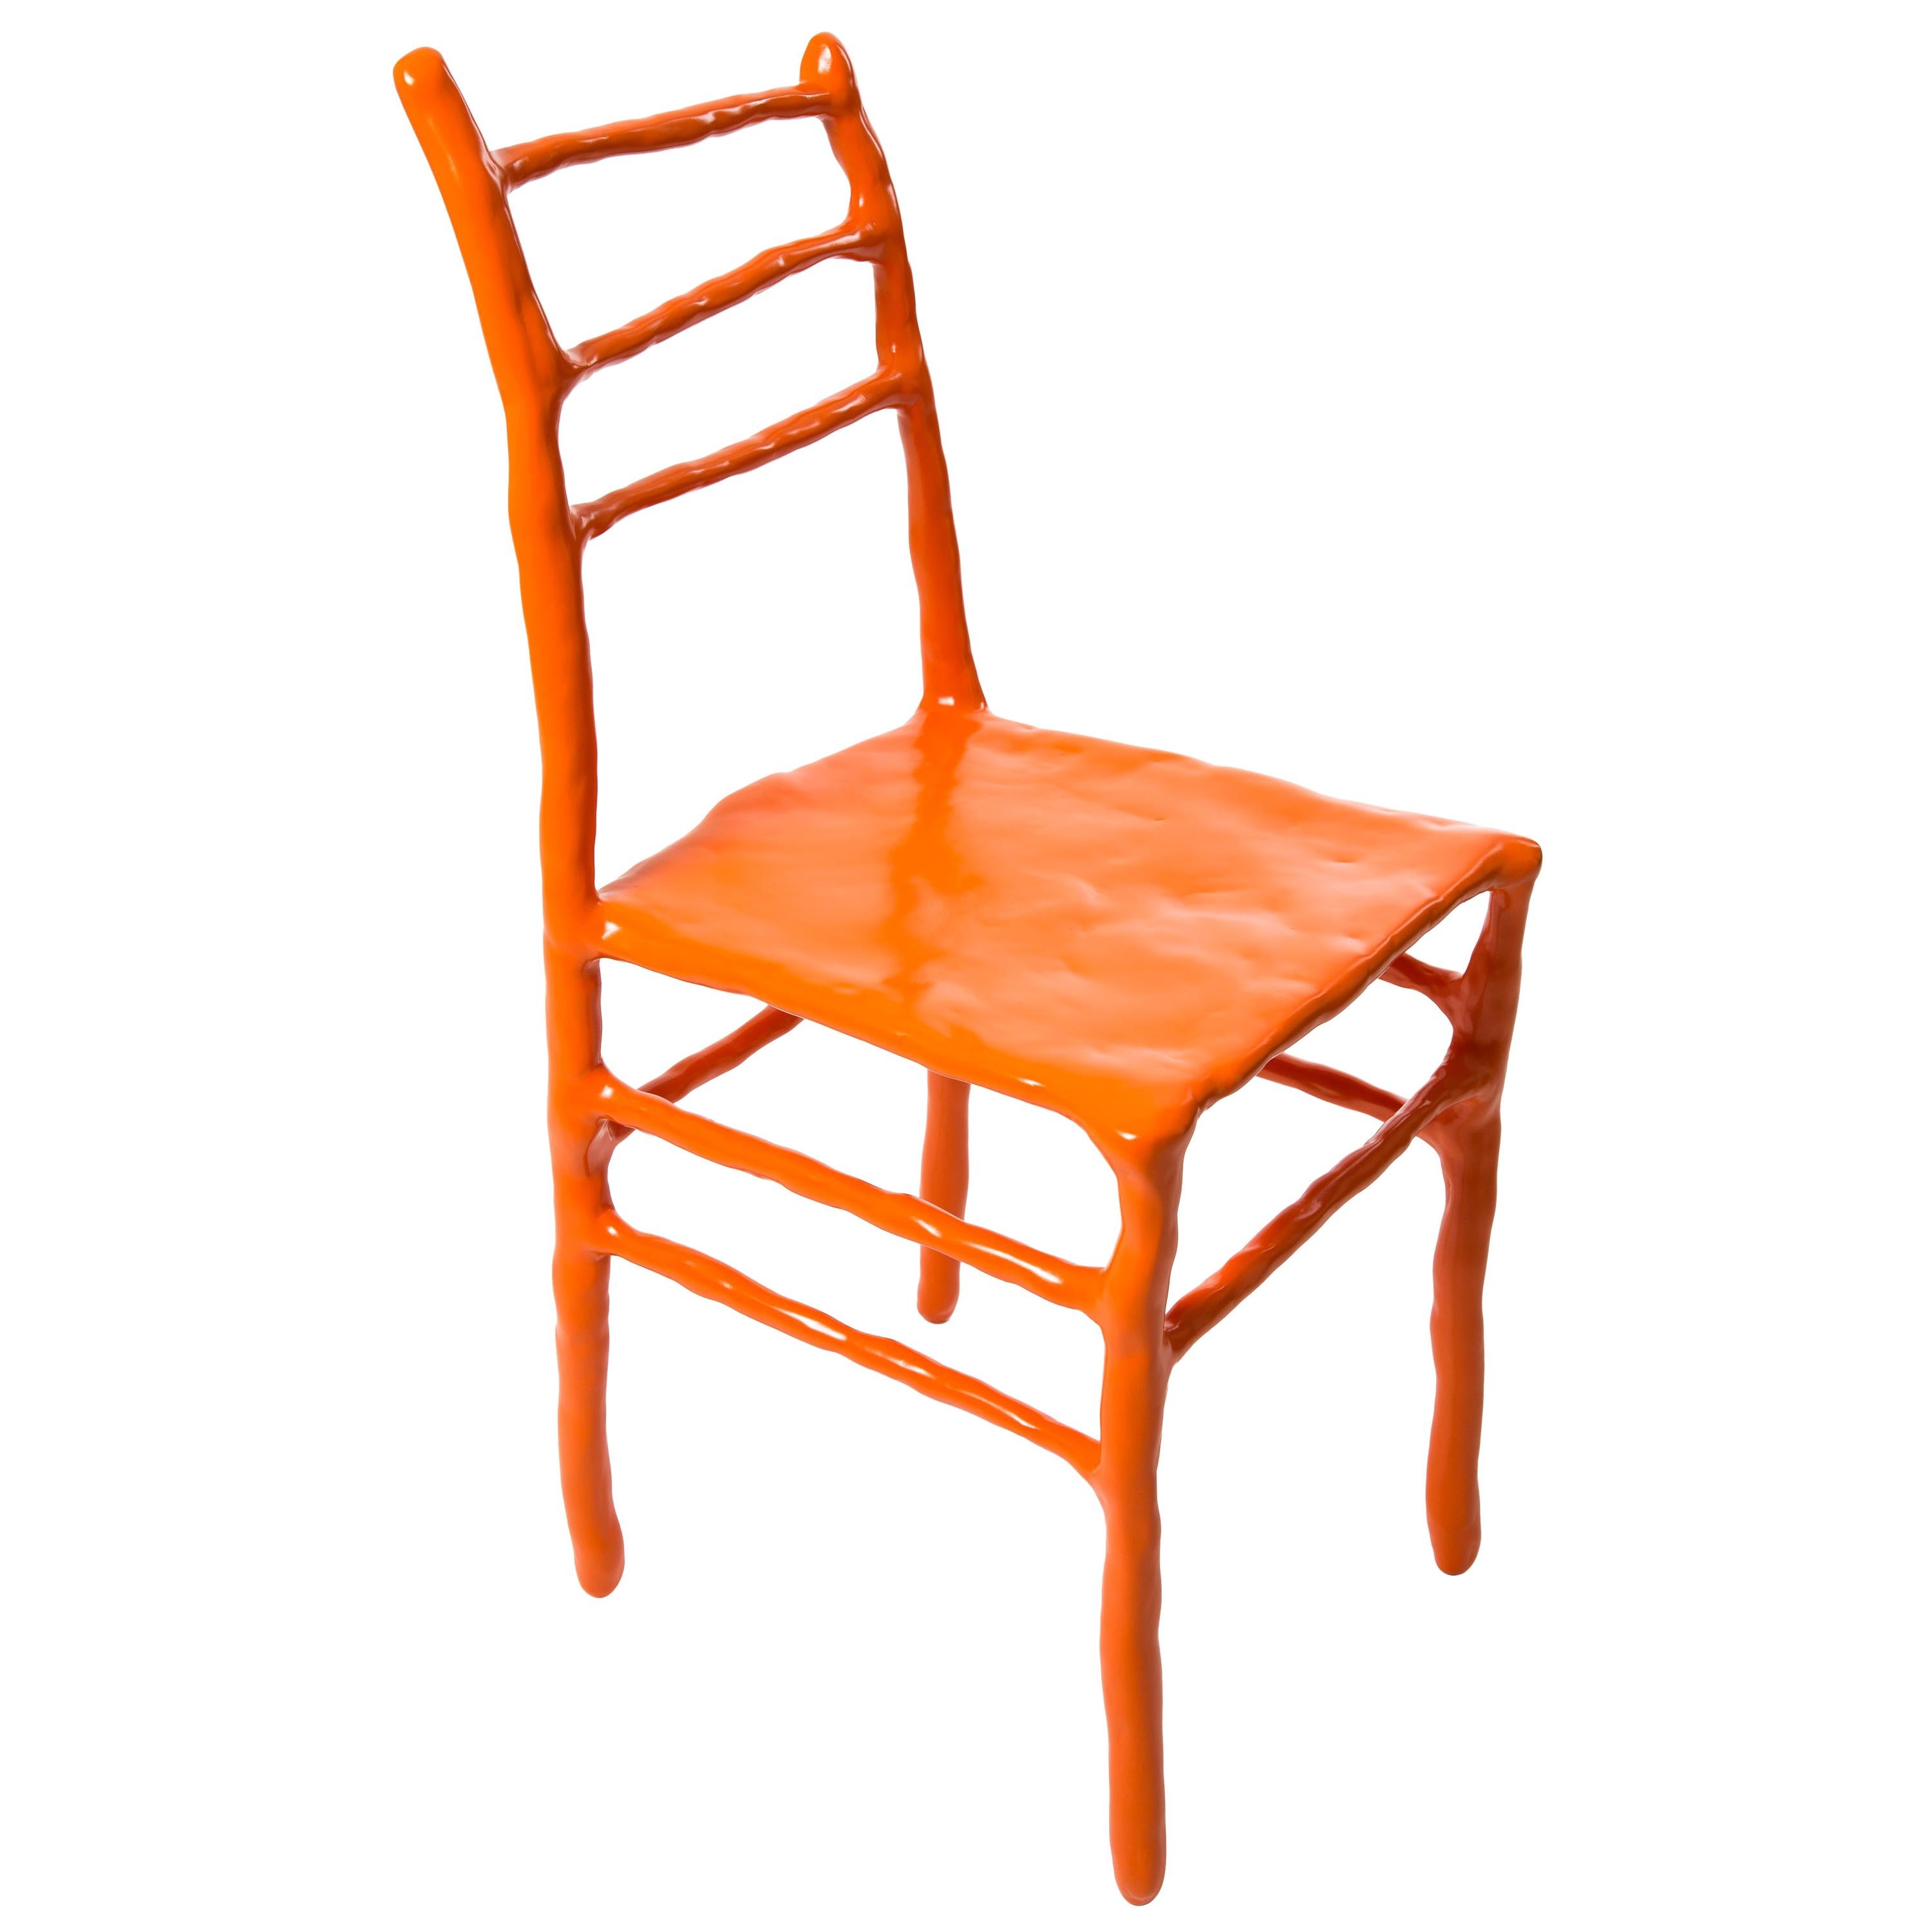 Maarten Baas Clay Chair Limited Edition Basel Chair 2007 Orange For Sale